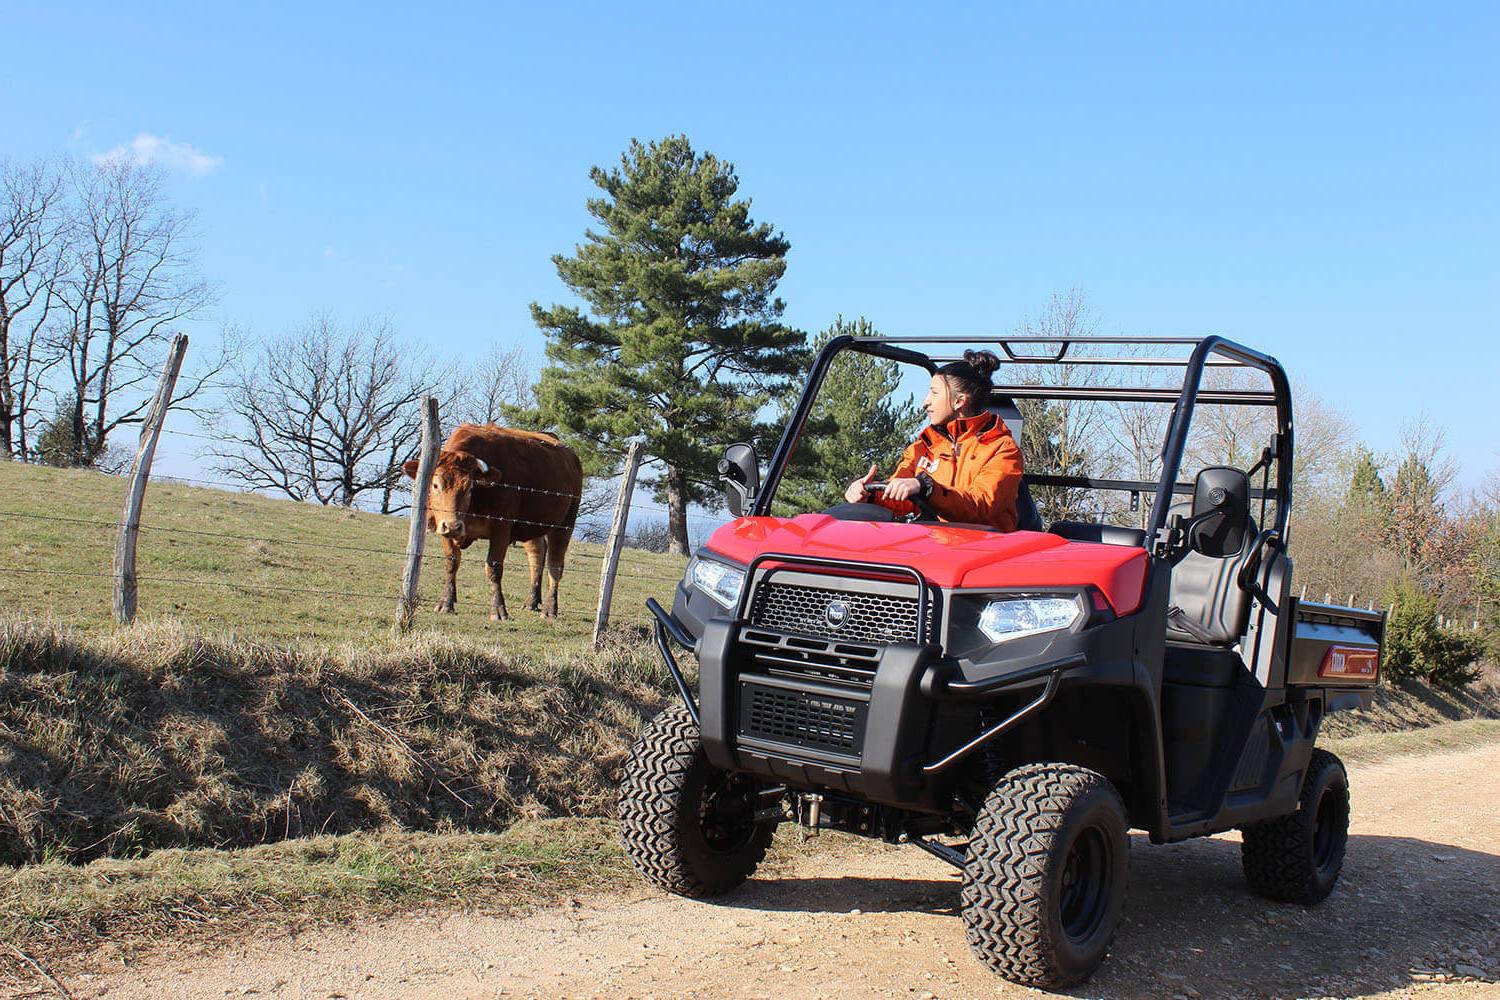 Hobby farm machinery: find the best hobby farm tractors and UTV's at Kioti